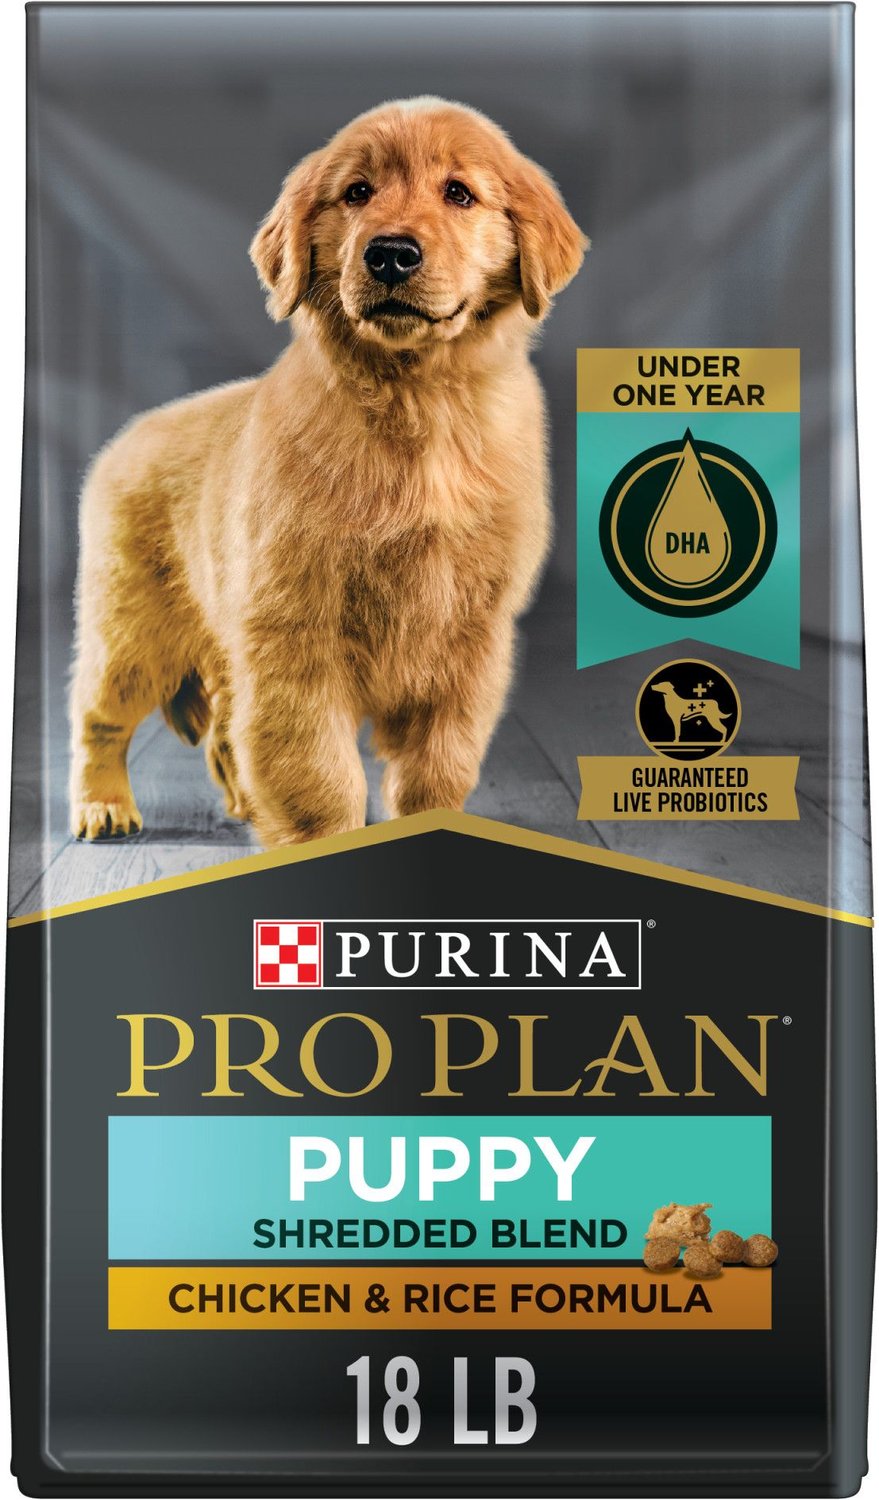 purina pro choice dog food